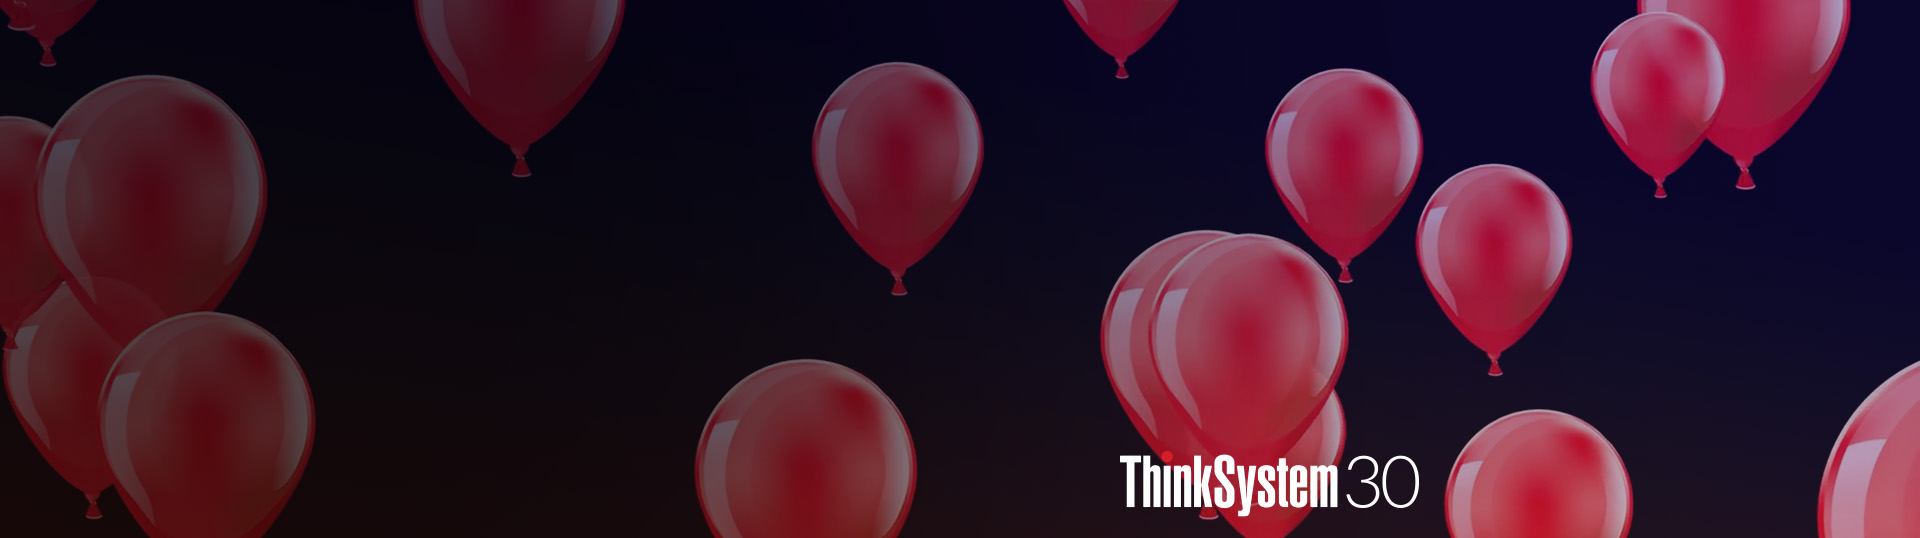 30th anniversary of ThinkSystem servers